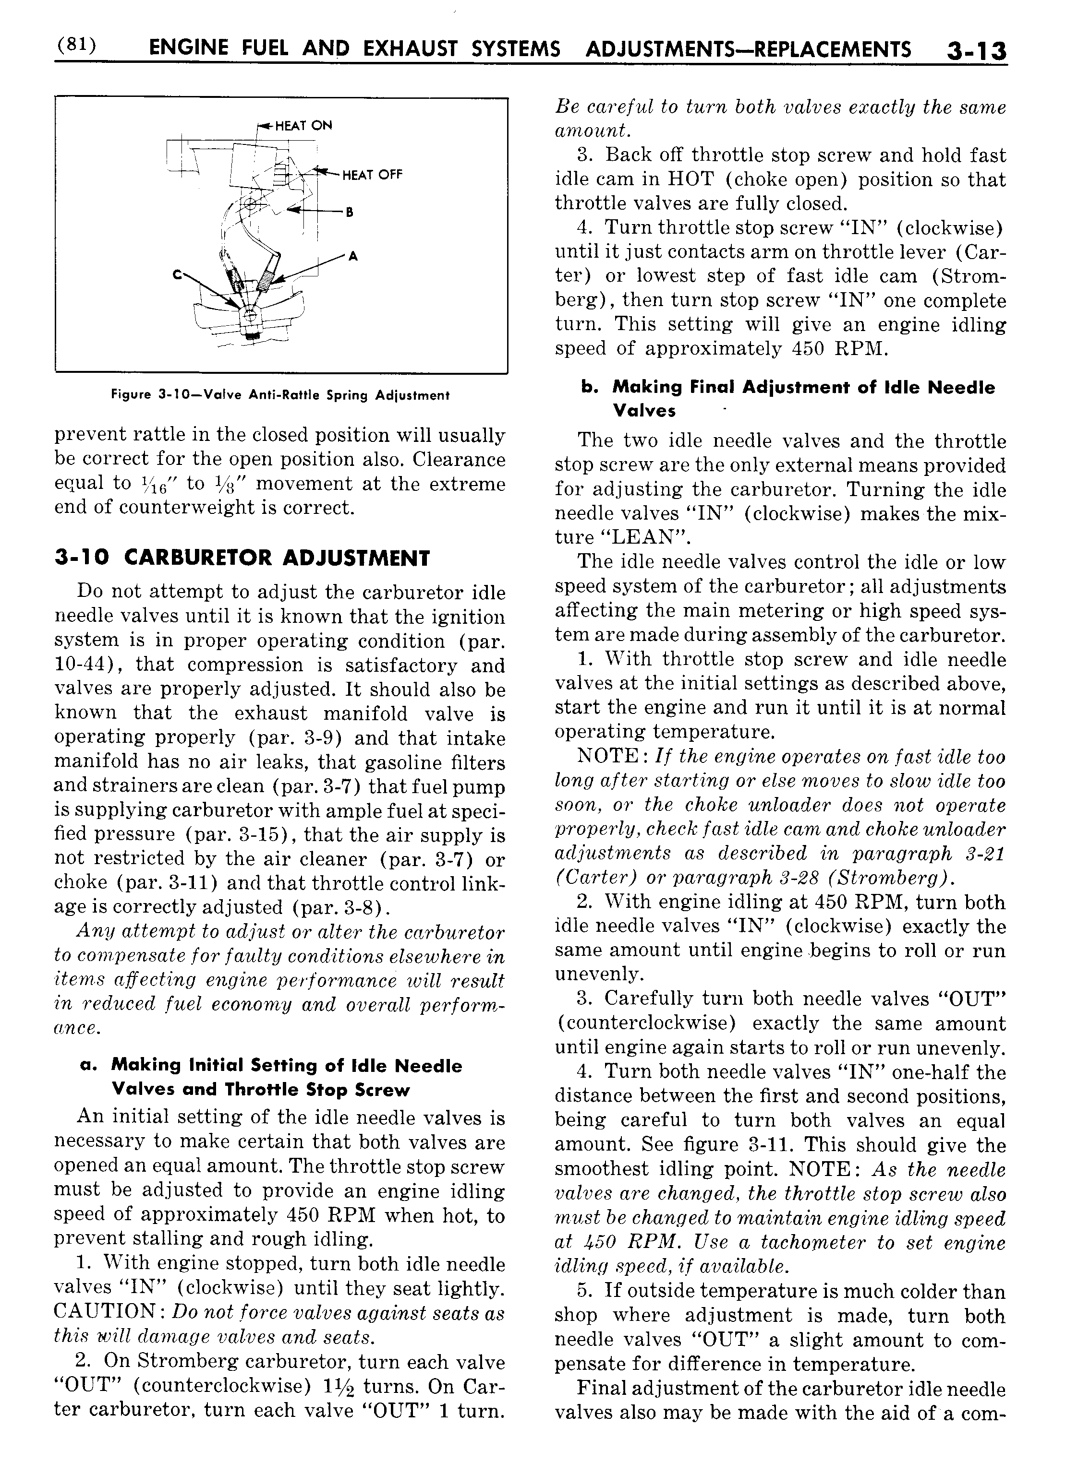 n_04 1951 Buick Shop Manual - Engine Fuel & Exhaust-013-013.jpg